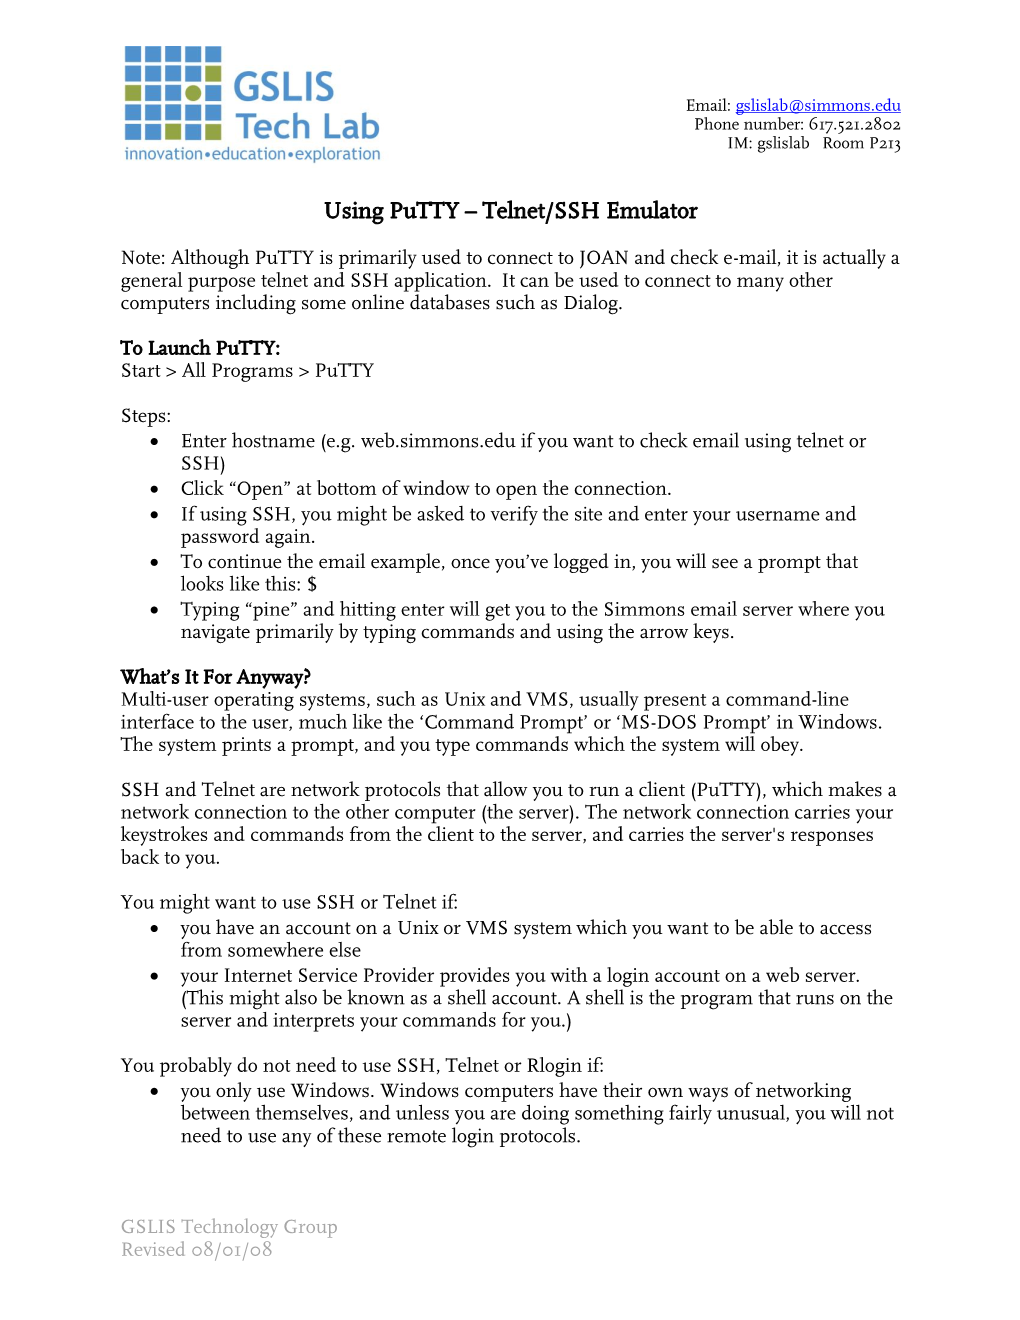 Using Putty – Telnet/SSH Emulator